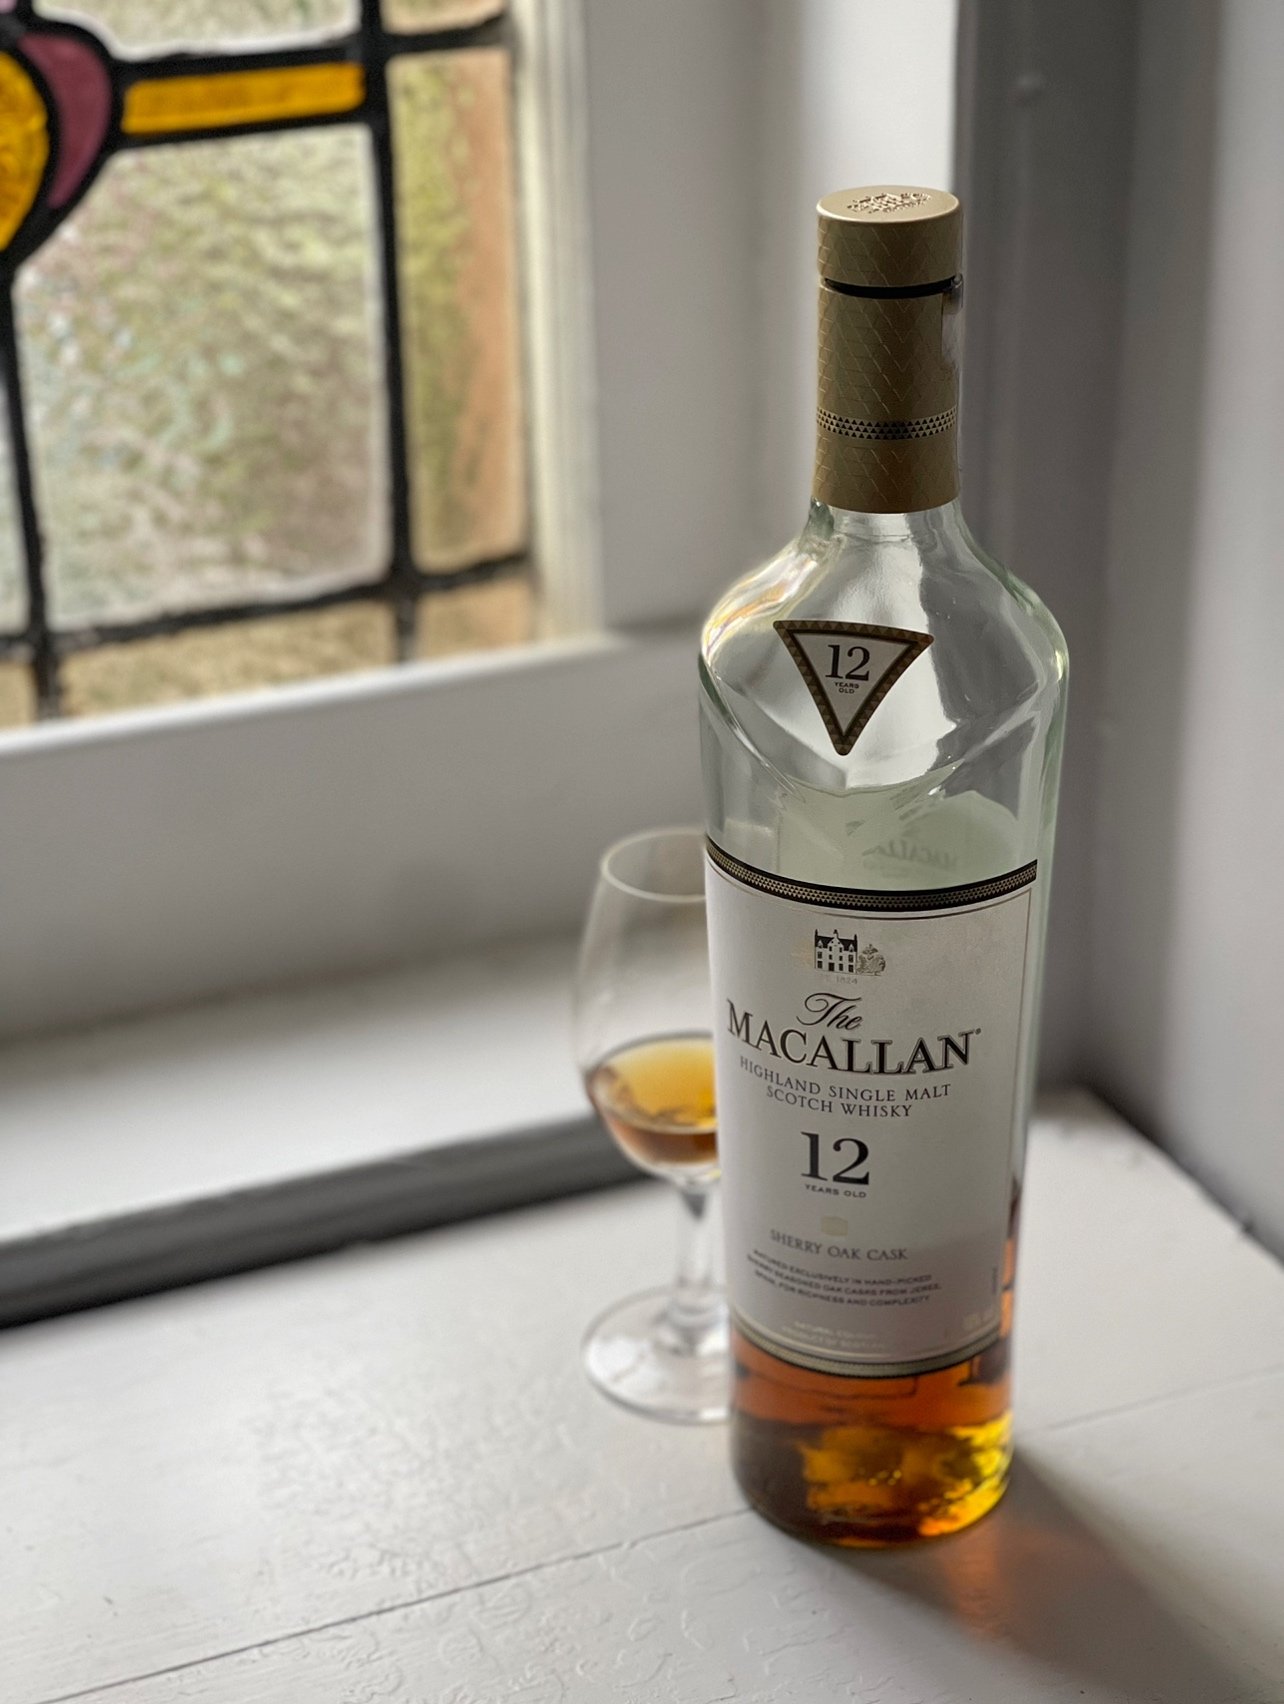 The Macallan Highland Single Malt Scotch Sherry Oak Cask 12 Year Old